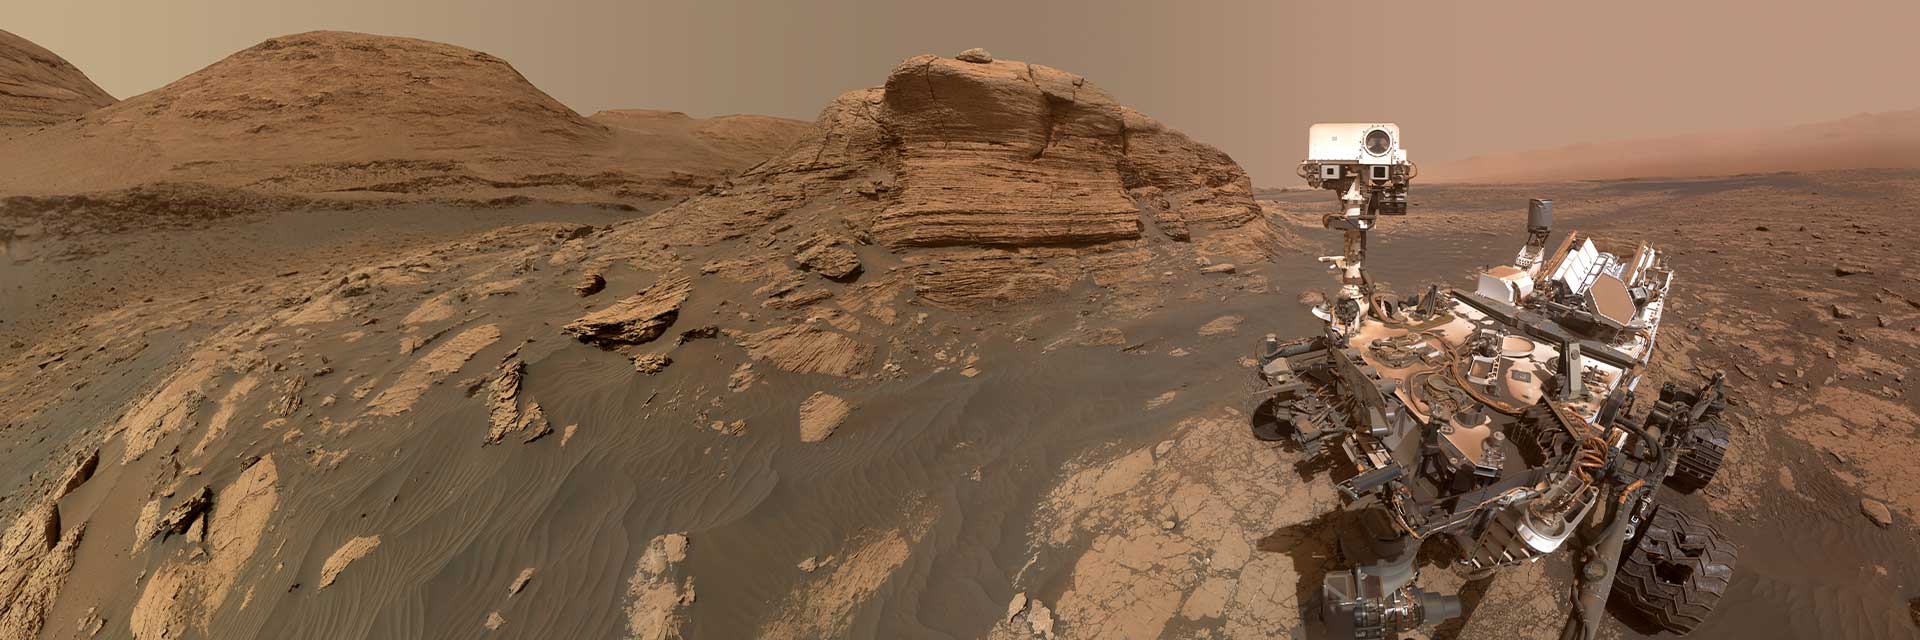 Mars Science Laboratory: Curiosity Rover